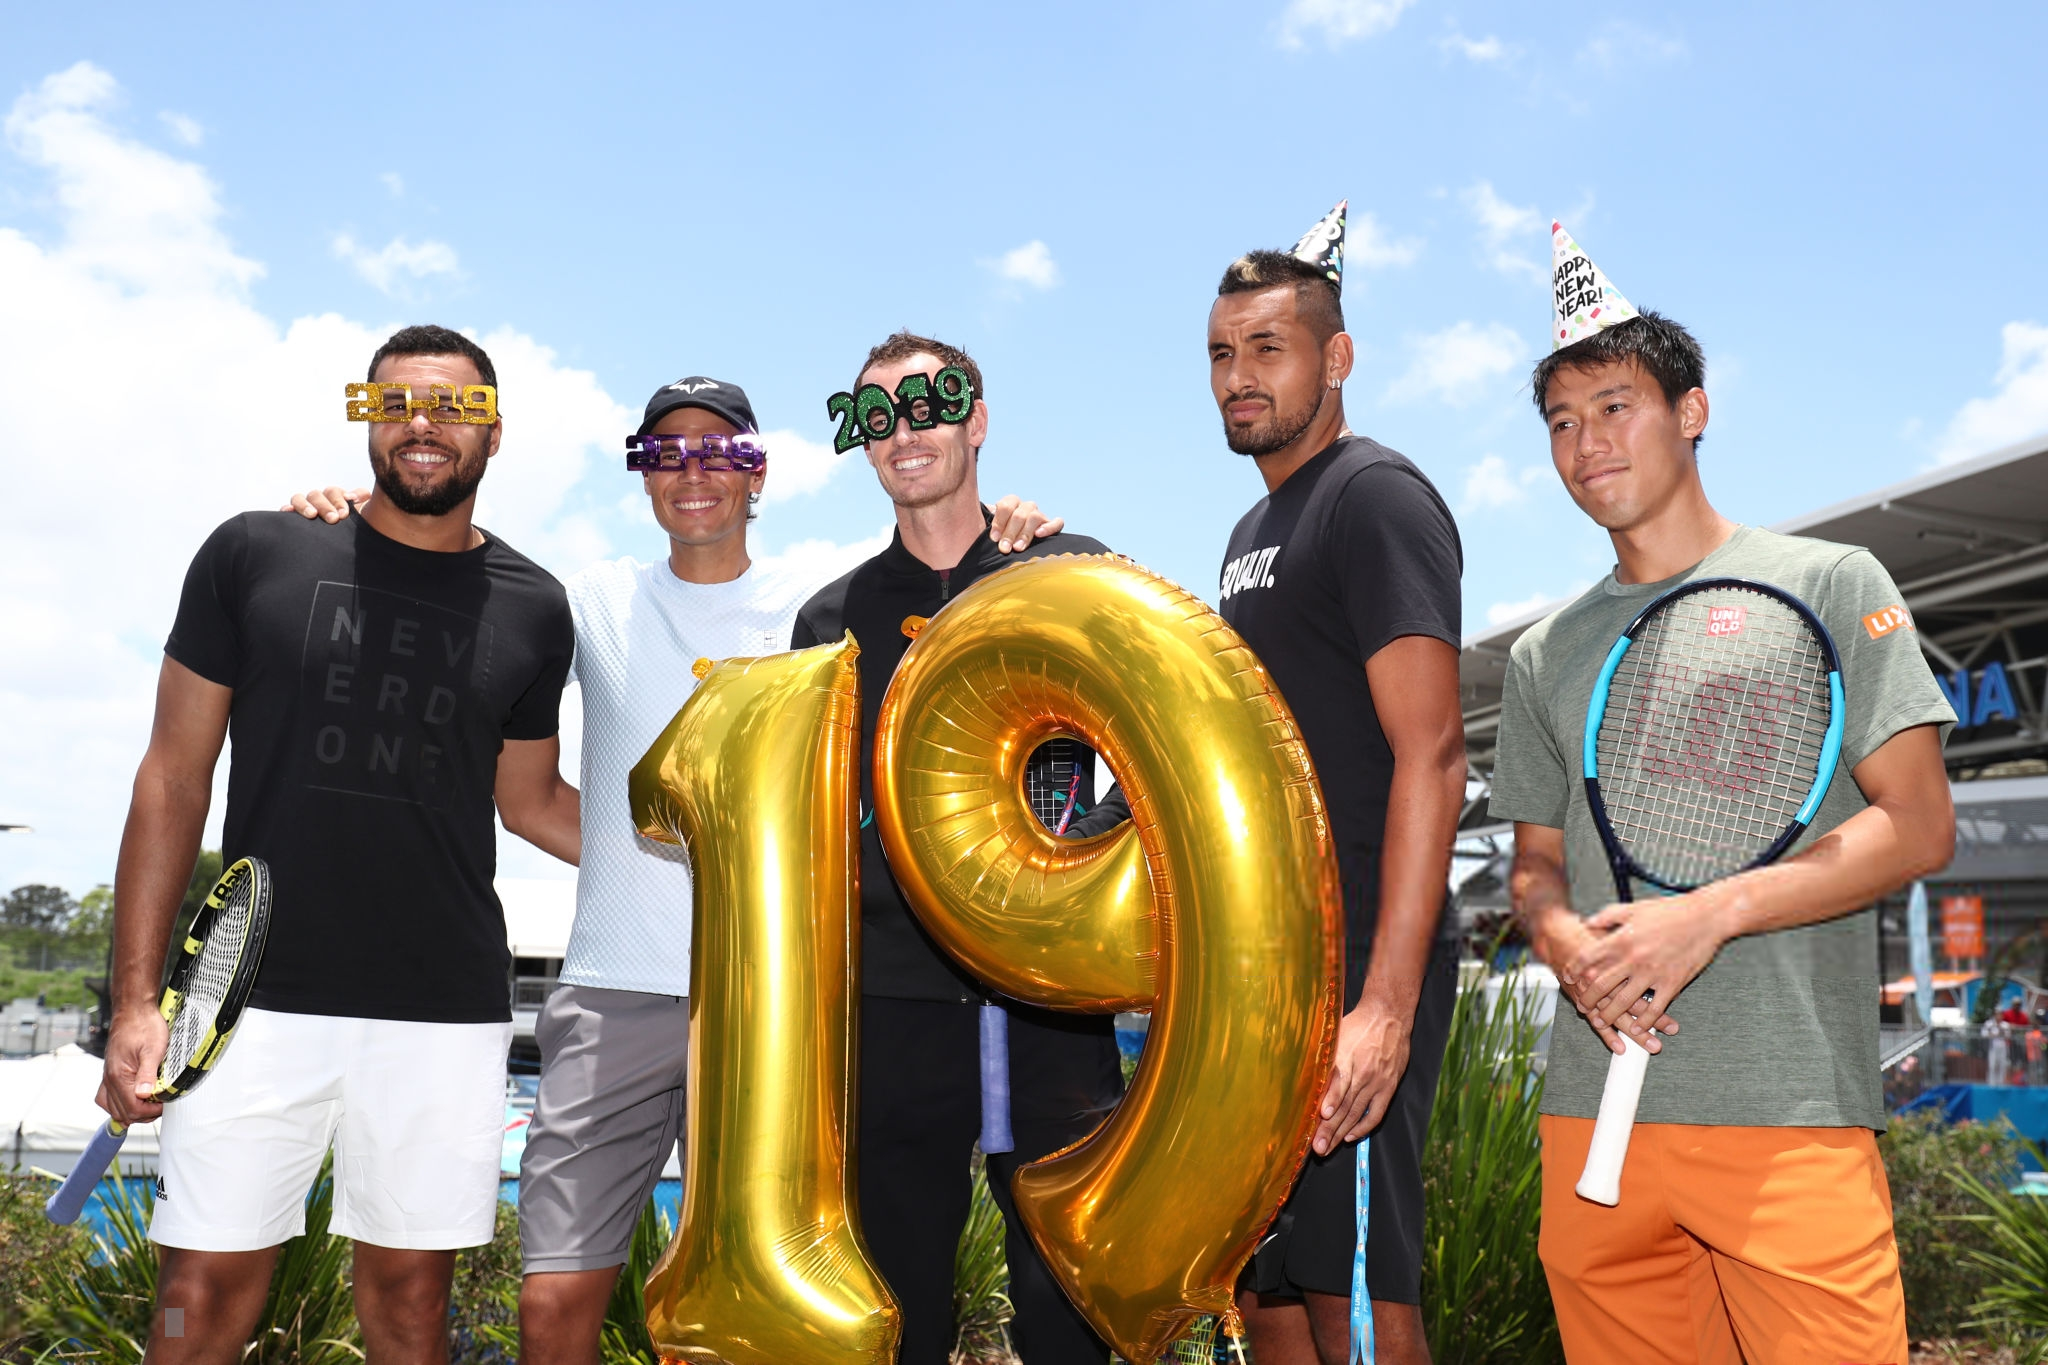 Happy New Year from Rafa, Jo, Andy, Nick and Kei! – Rafael Nadal Fans2048 x 1365